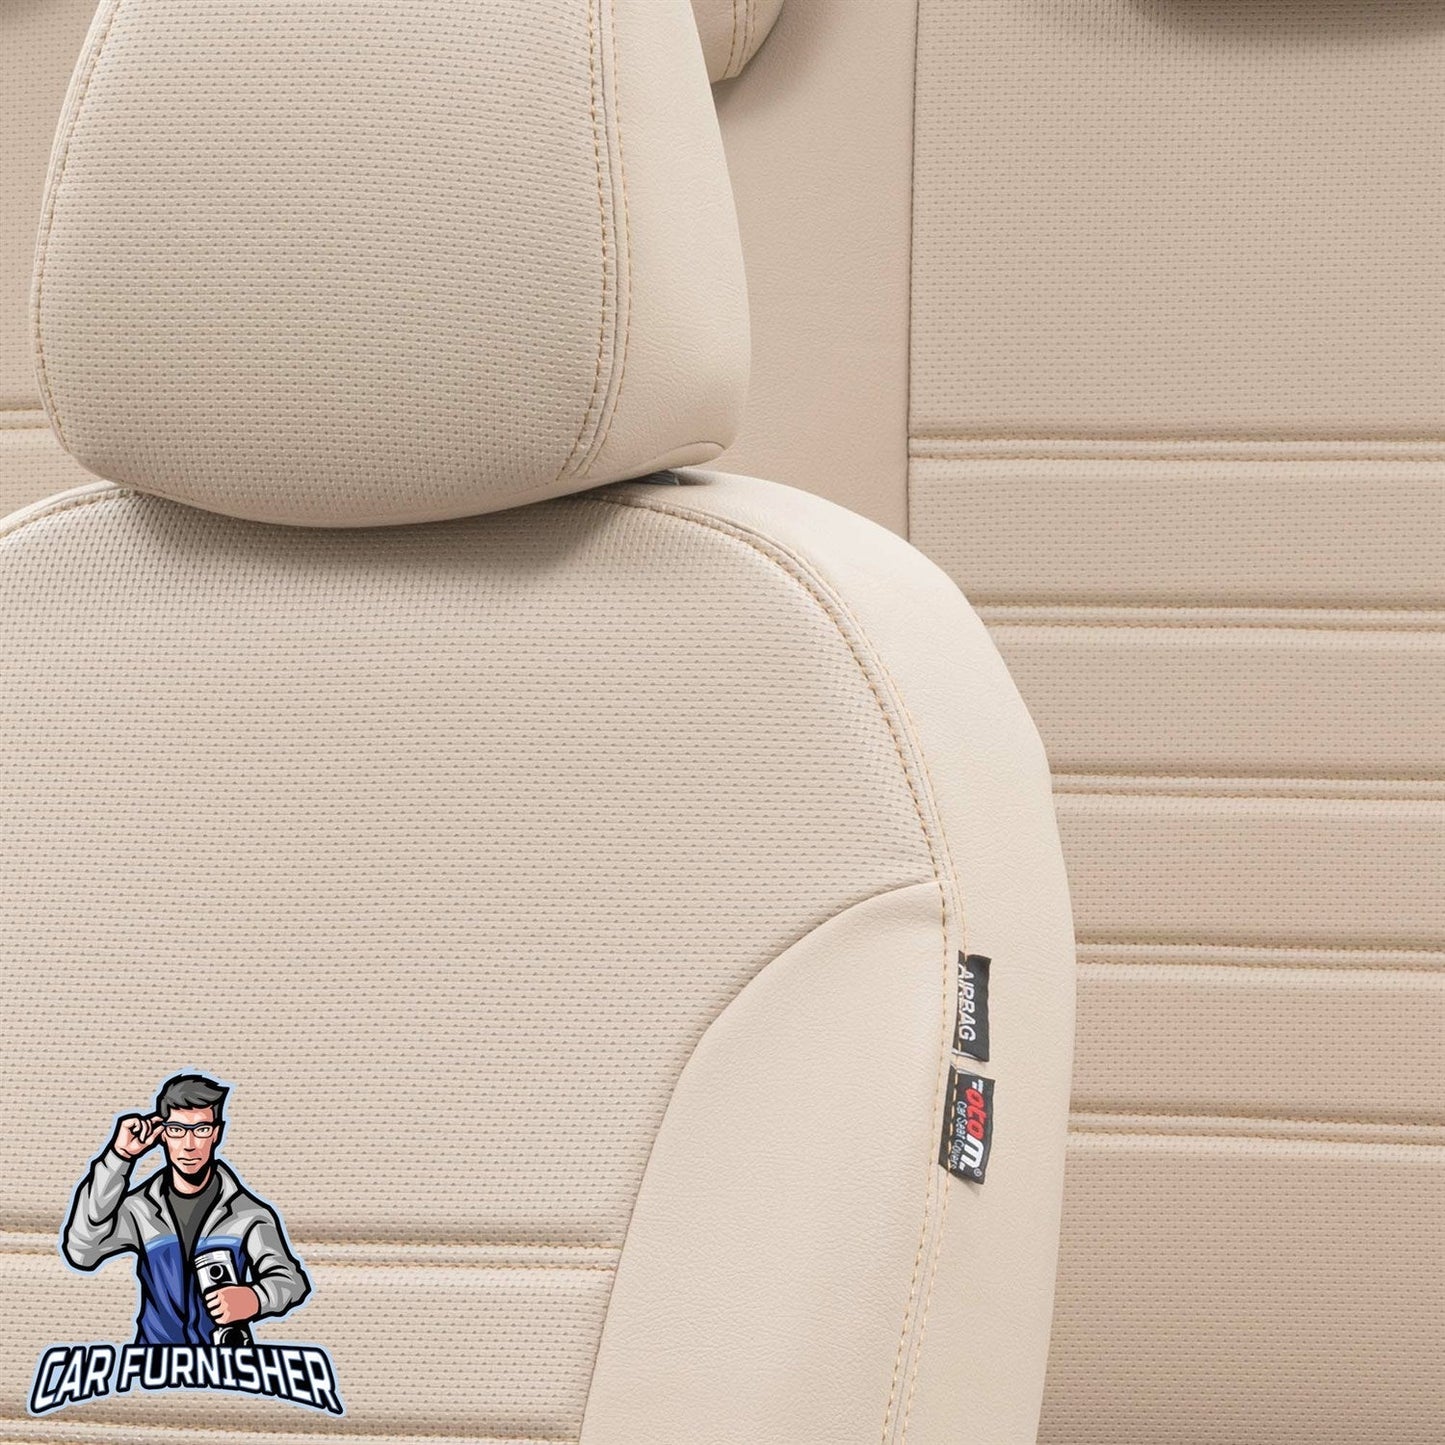 Citroen Berlingo Seat Covers New York Leather Design Beige Leather